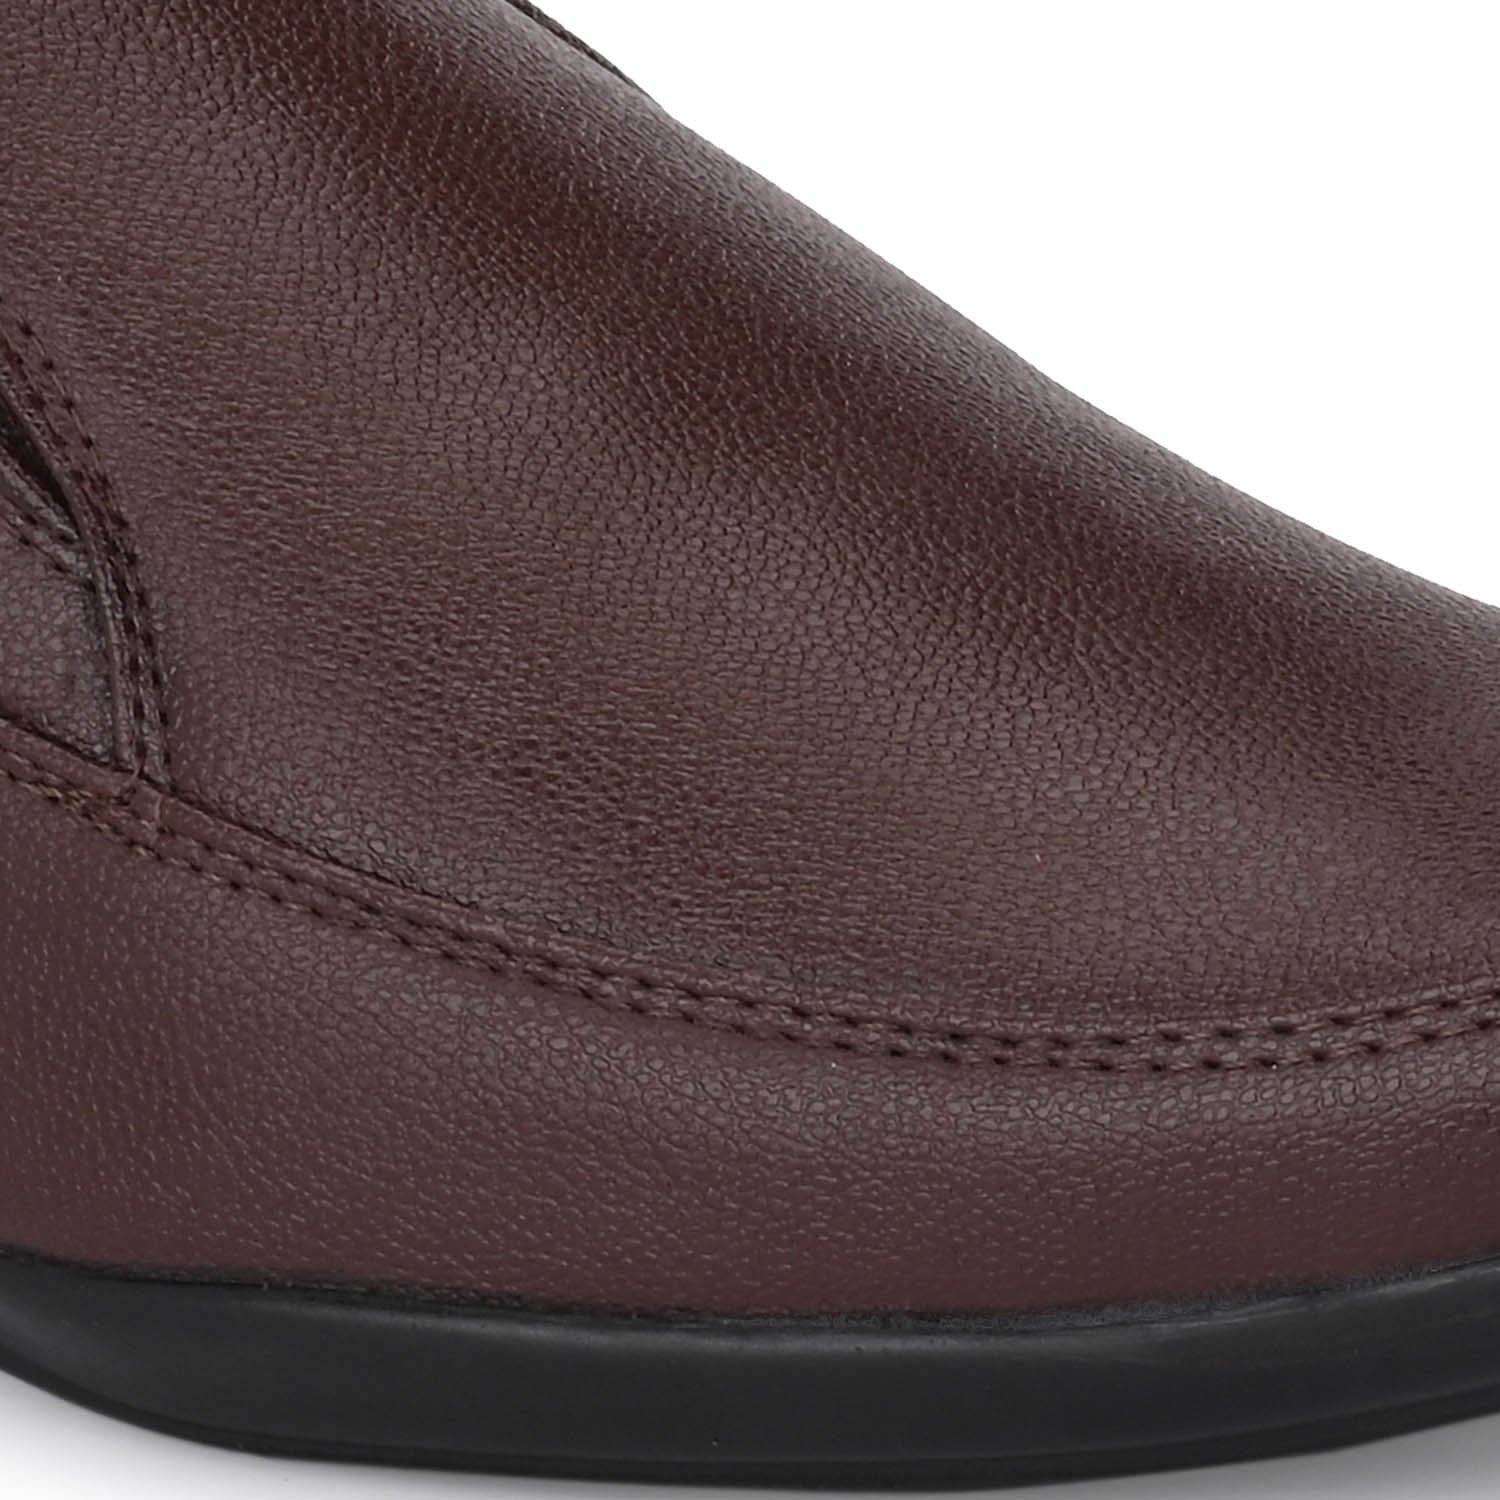 Pair-it Men moccasin Formal Shoes - MN-RYDER216-Brown